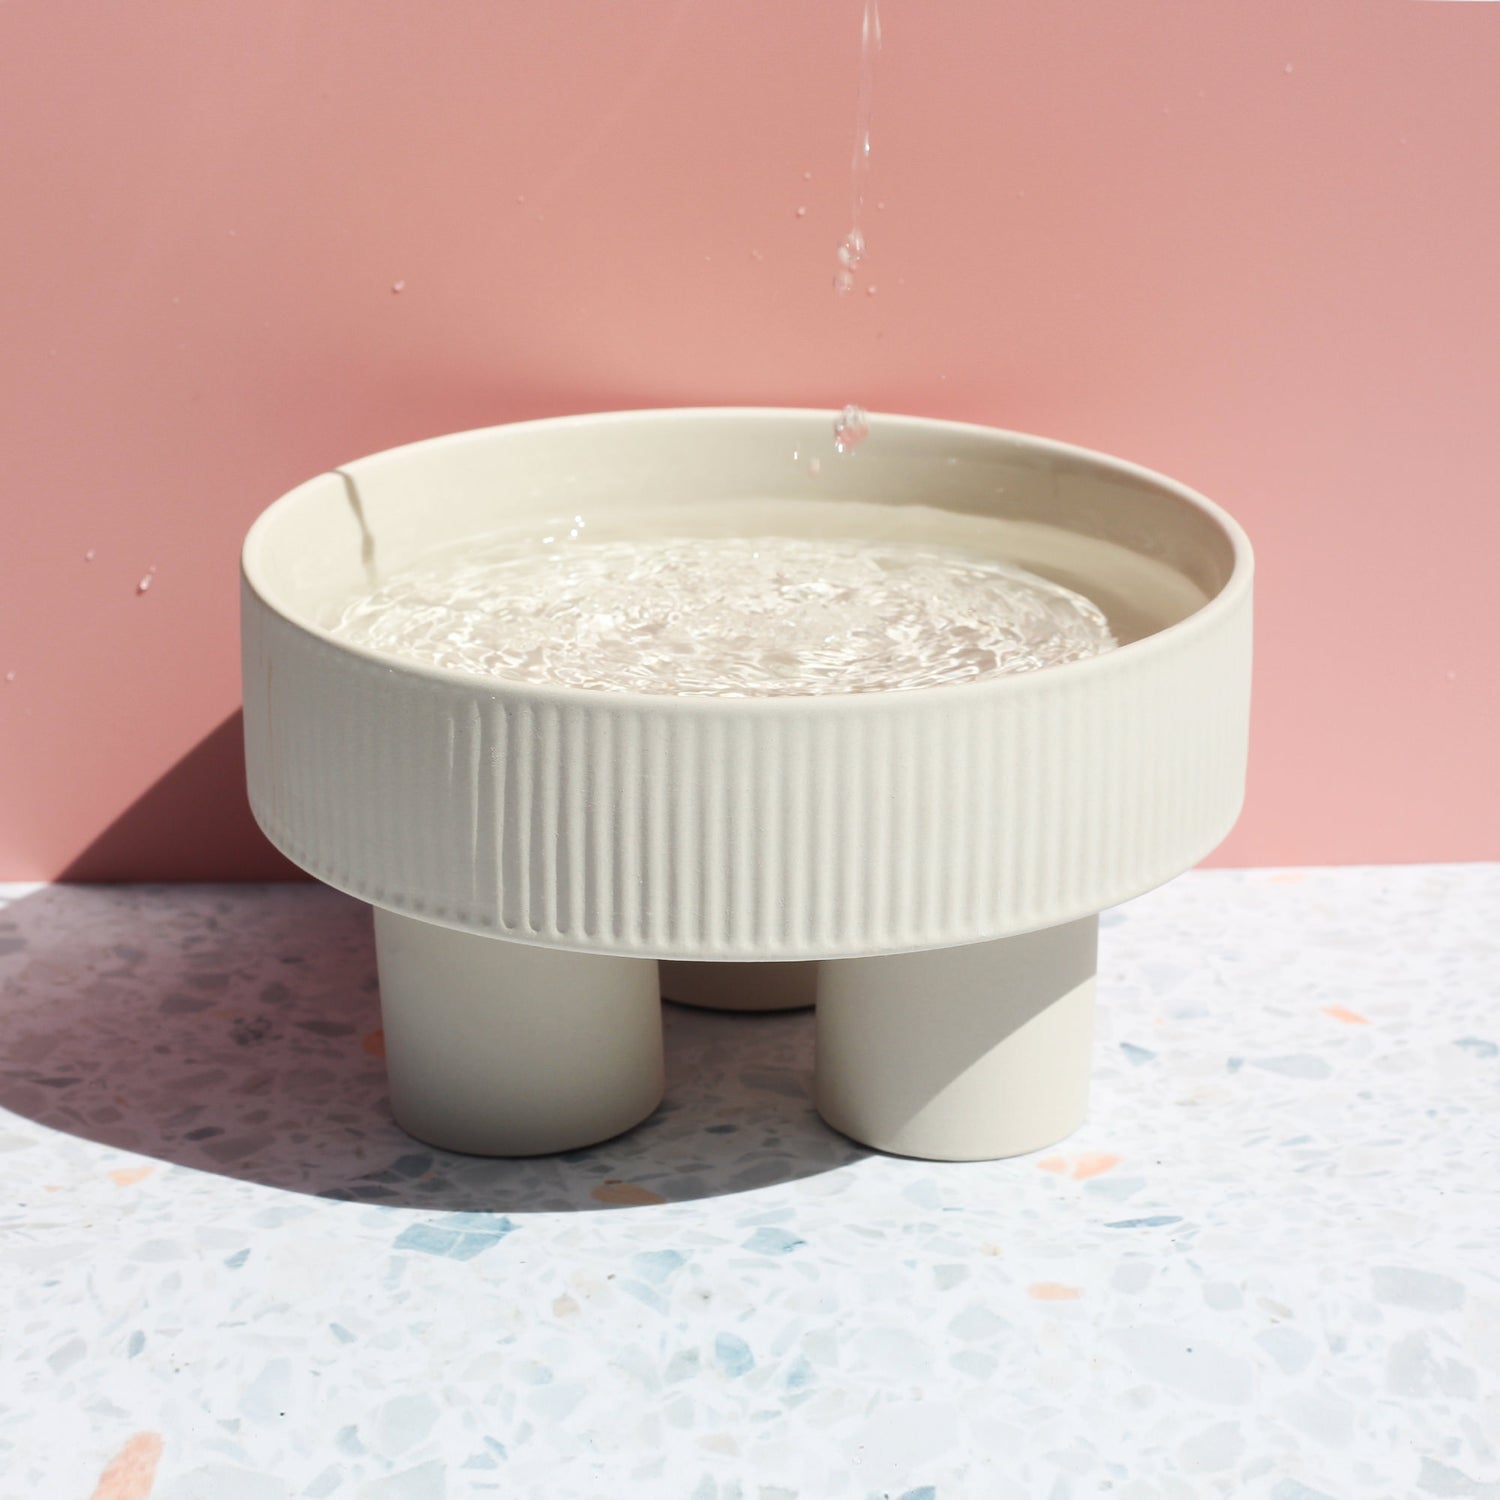 ceramic raised dog bowl with water